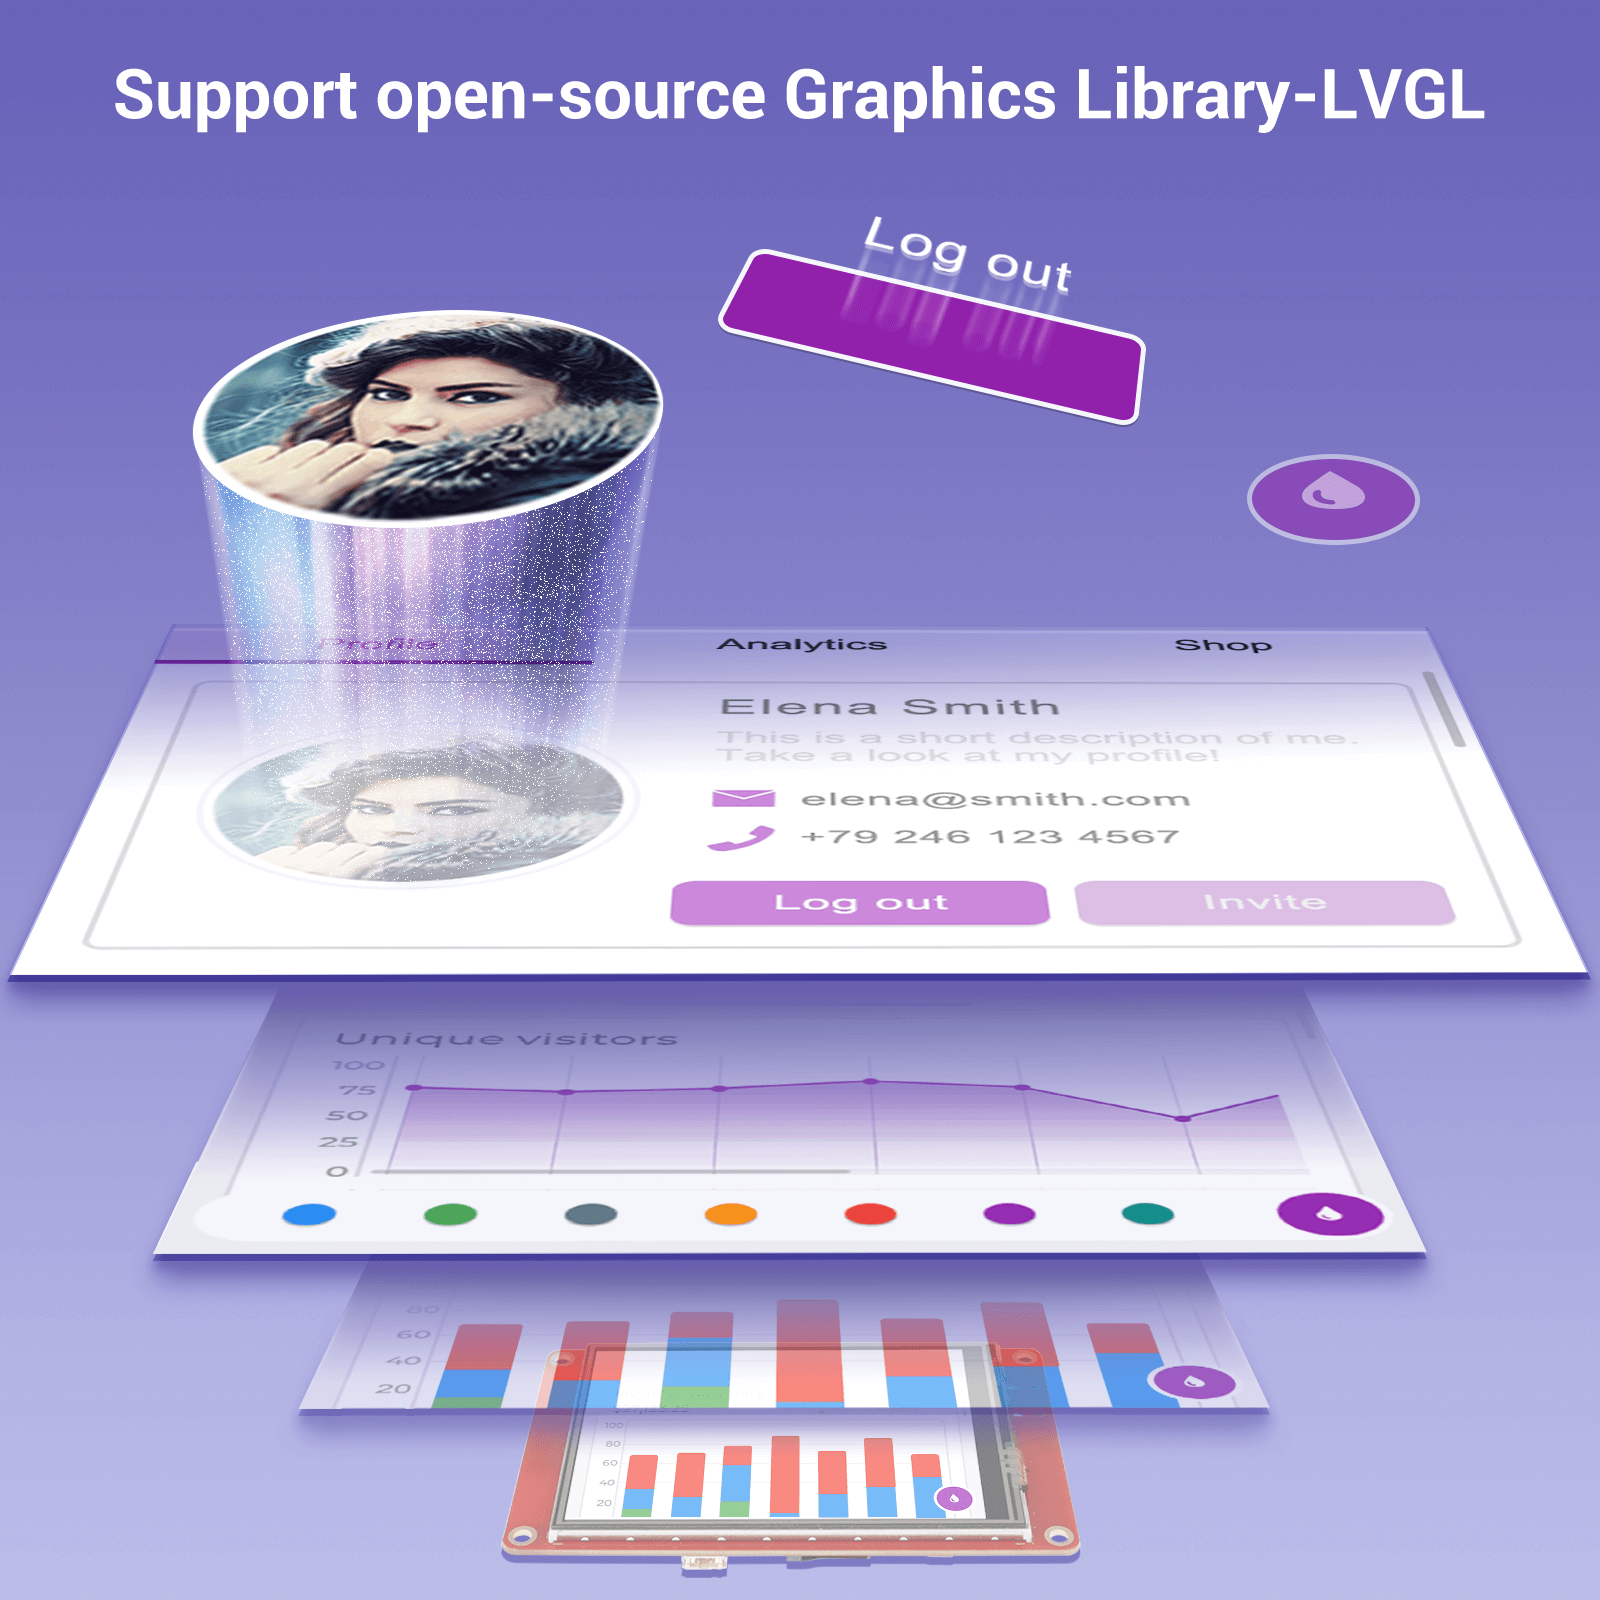 esp32 3.5 inch display support LVGL